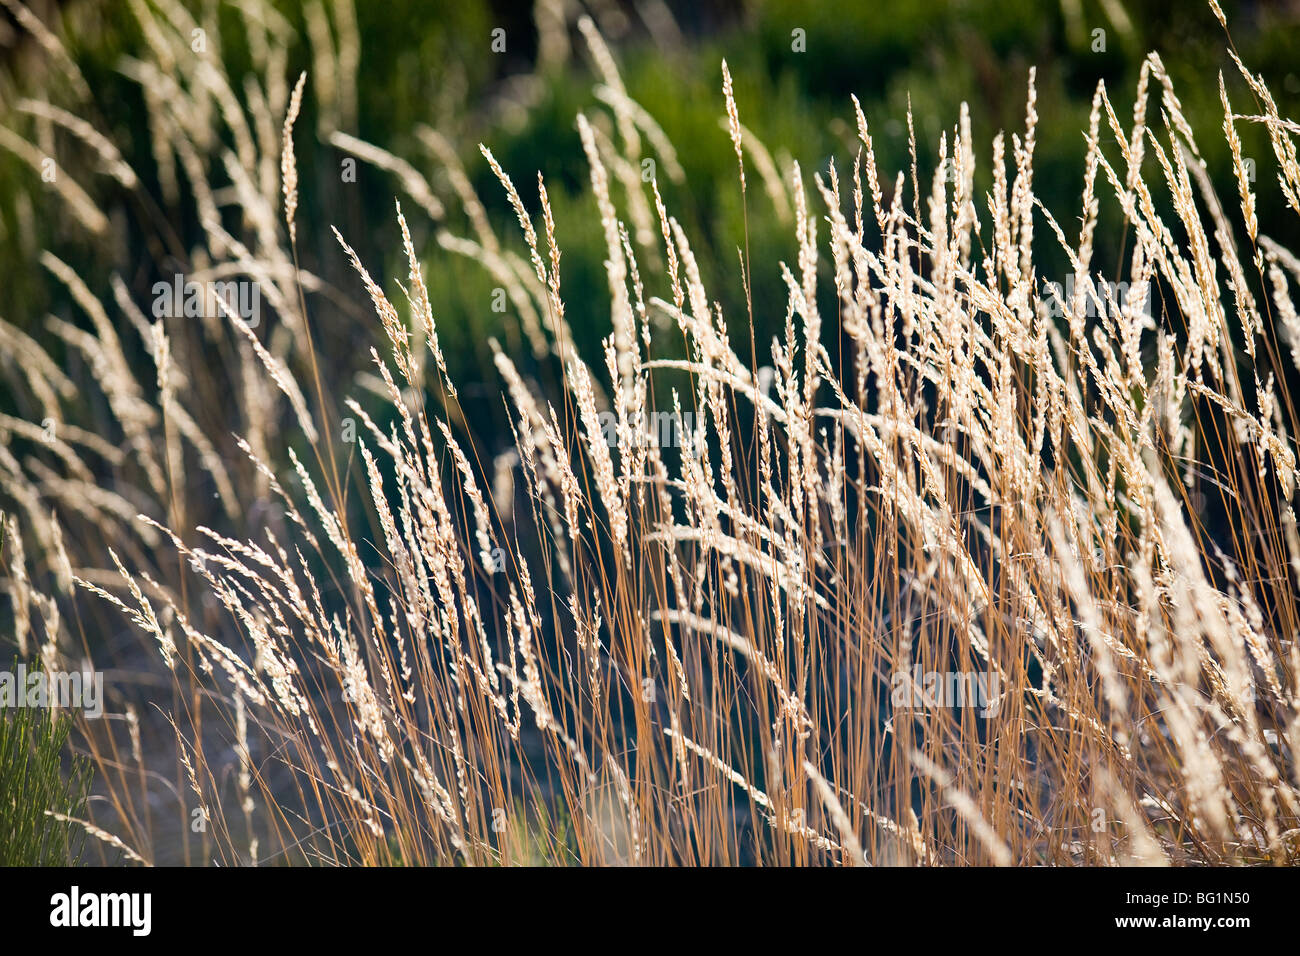 In autunno, graminacee selvatiche nel vento (Puy de Dôme - Auvergne - Francia). Graminées sauvages dans le vent en automne (Francia). Foto Stock